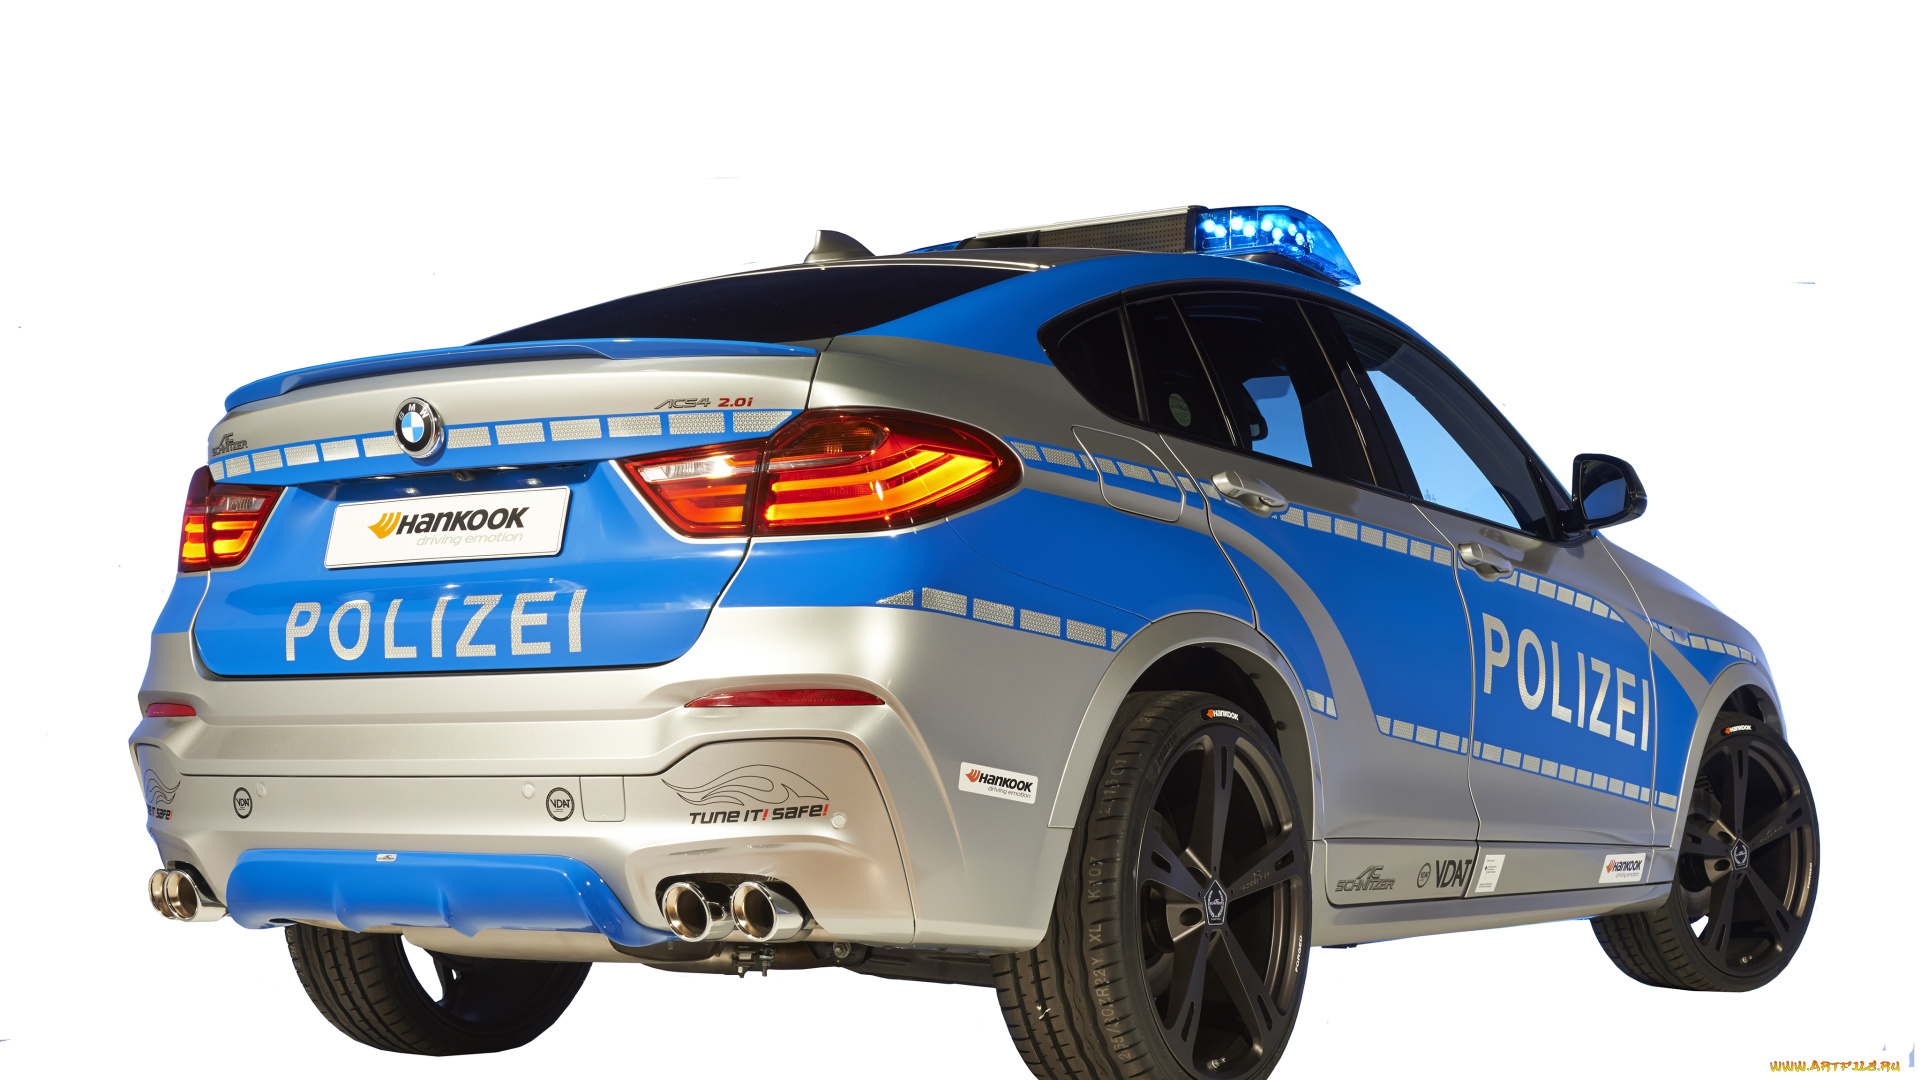 автомобили, полиция, ac, schnitzer, 2014г, f26, acs, x4, polizei, concept, tune, it, safe